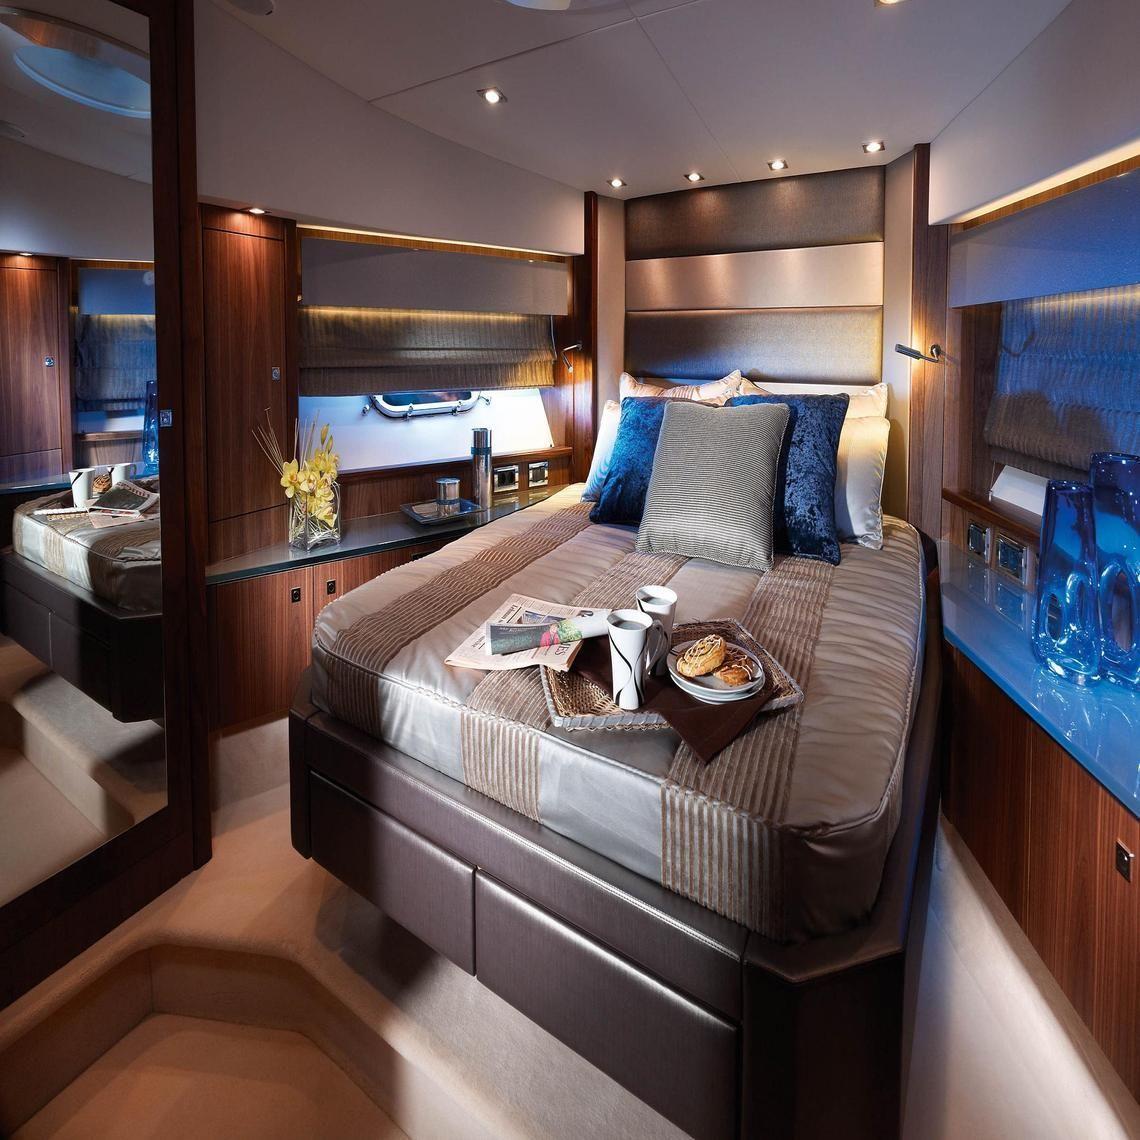 LUXURY YACHT BEDROOM. wallpaper. Luxury yachts and Rock